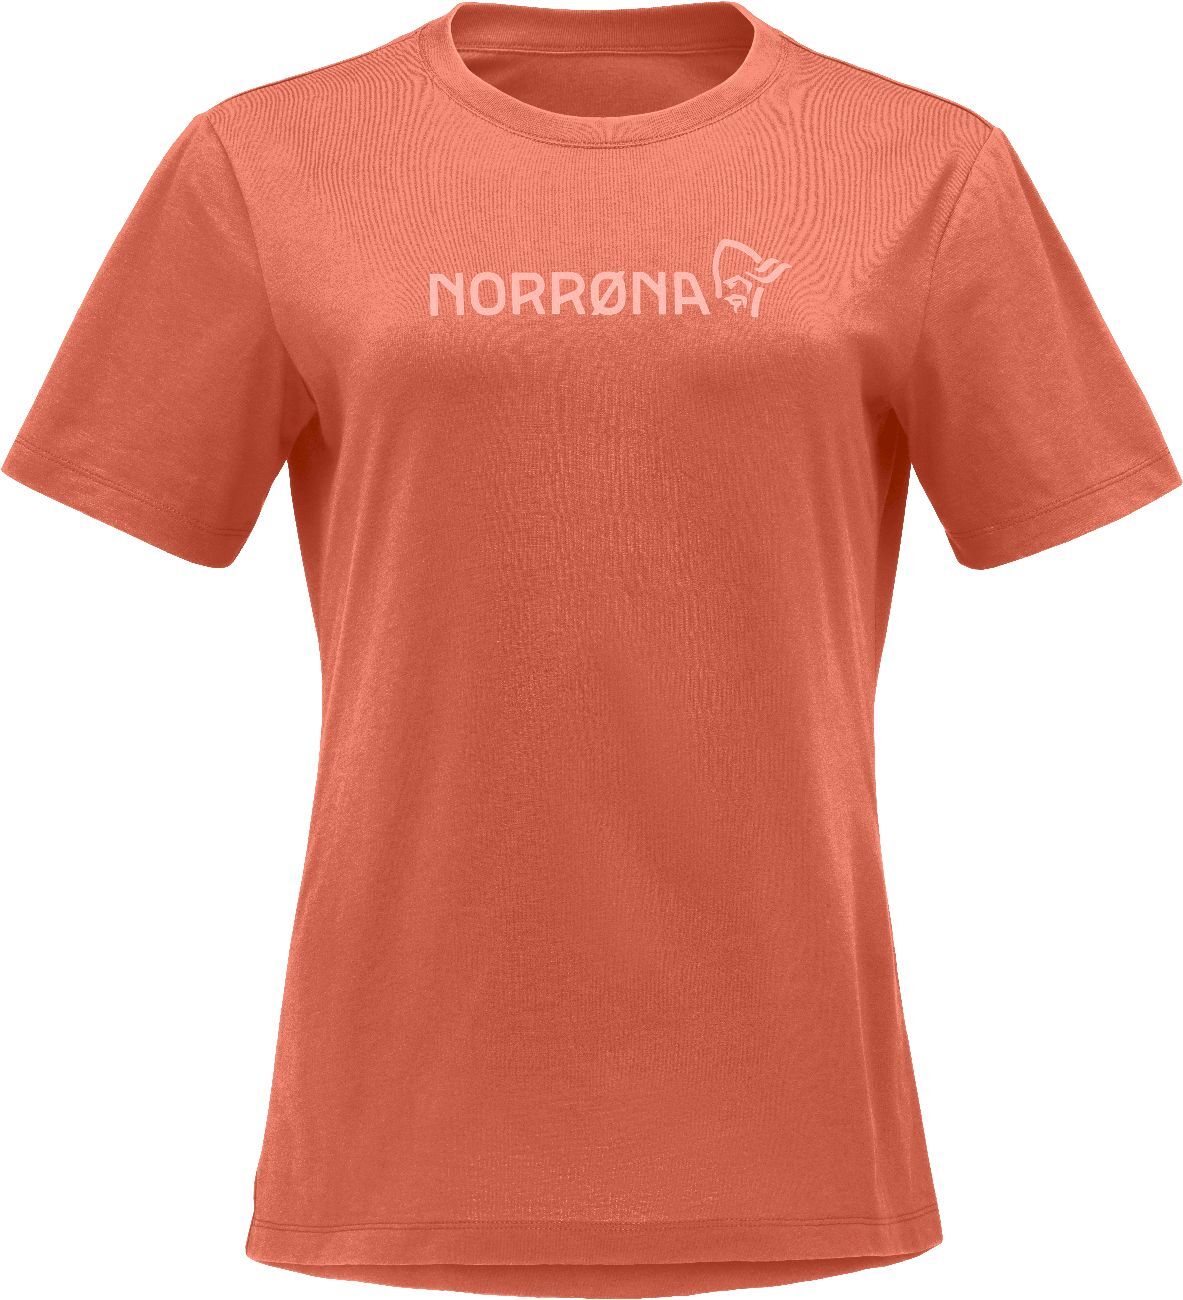 Norrona /29 Cotton Norrona Viking - T-shirt - Damer